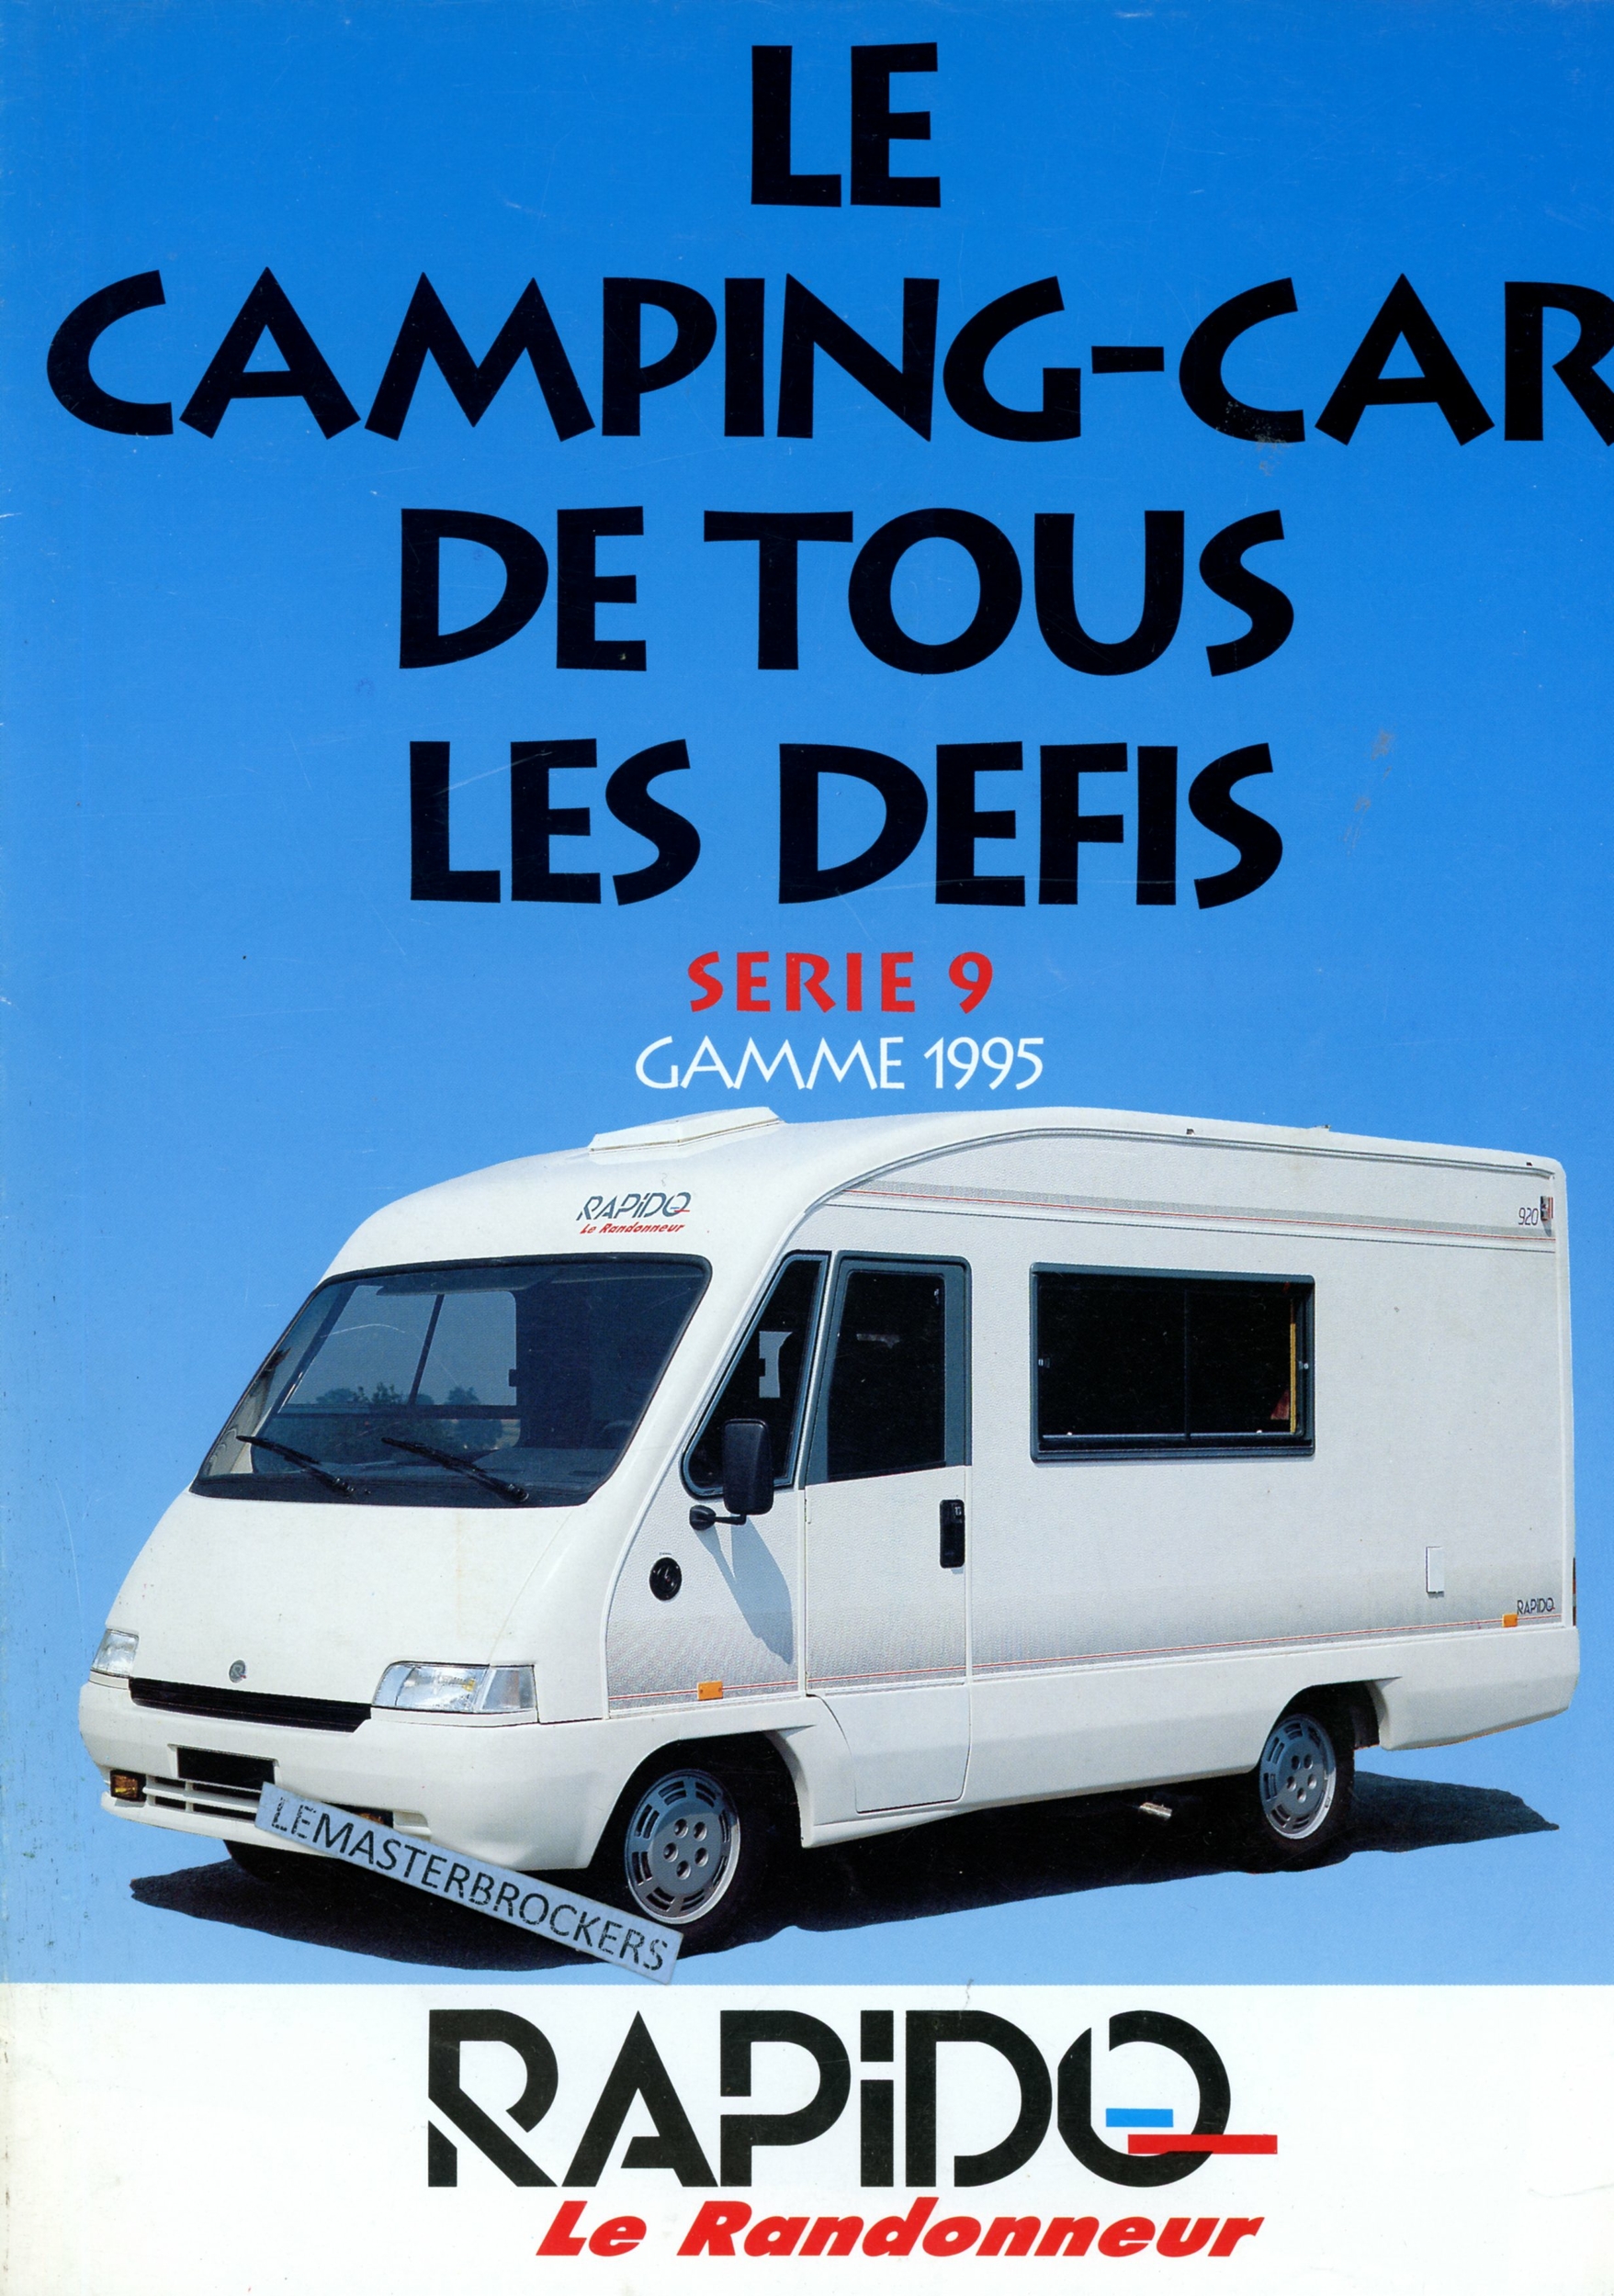 BROCHURE CAMPING-CAR RAPIDO LE RANDONNEIR SÉRIE 9 GAMME 1995 - SÉRIE 920 930 950 970